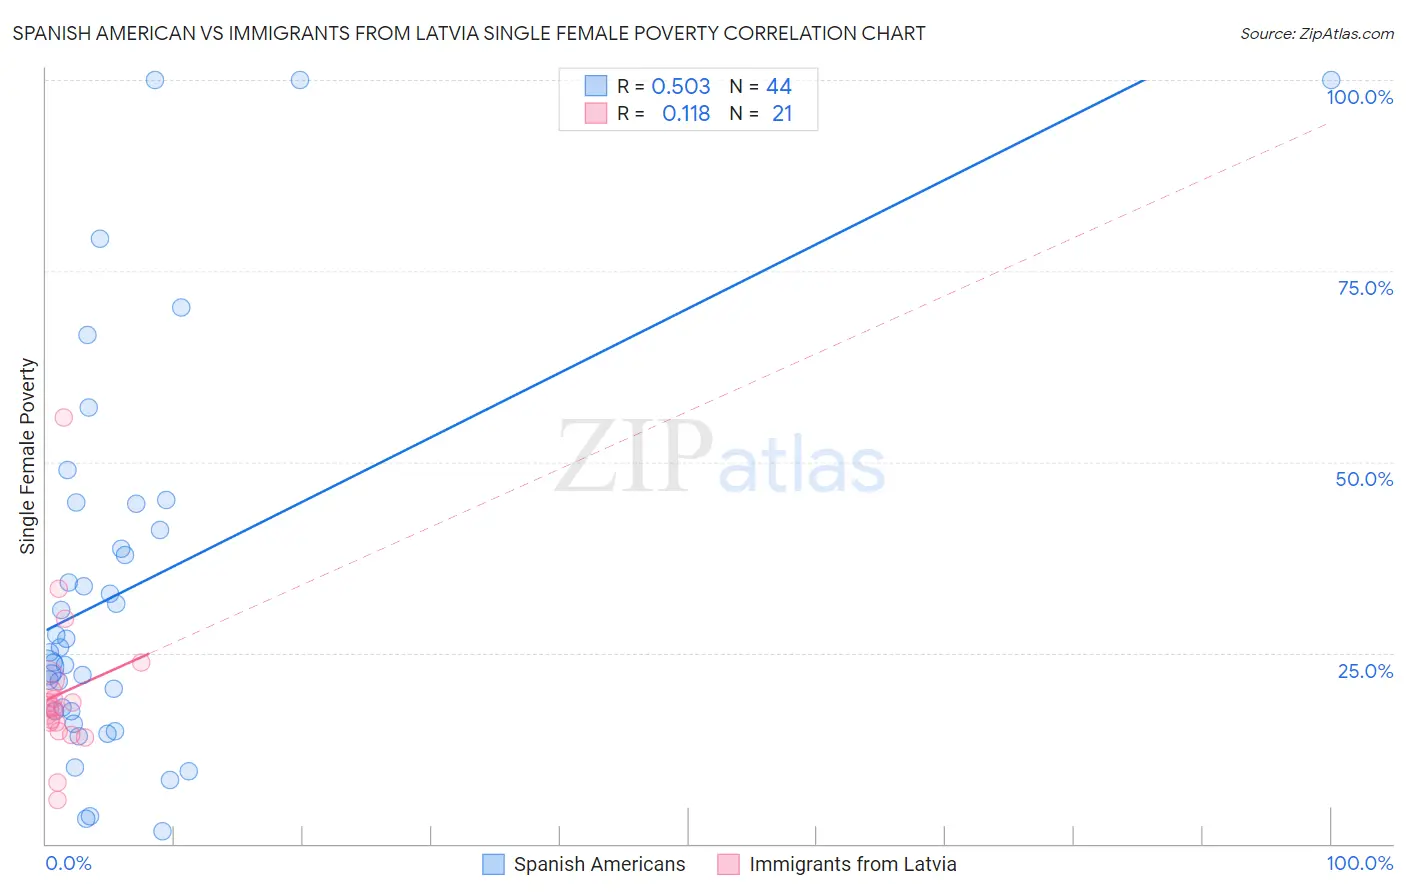 Spanish American vs Immigrants from Latvia Single Female Poverty